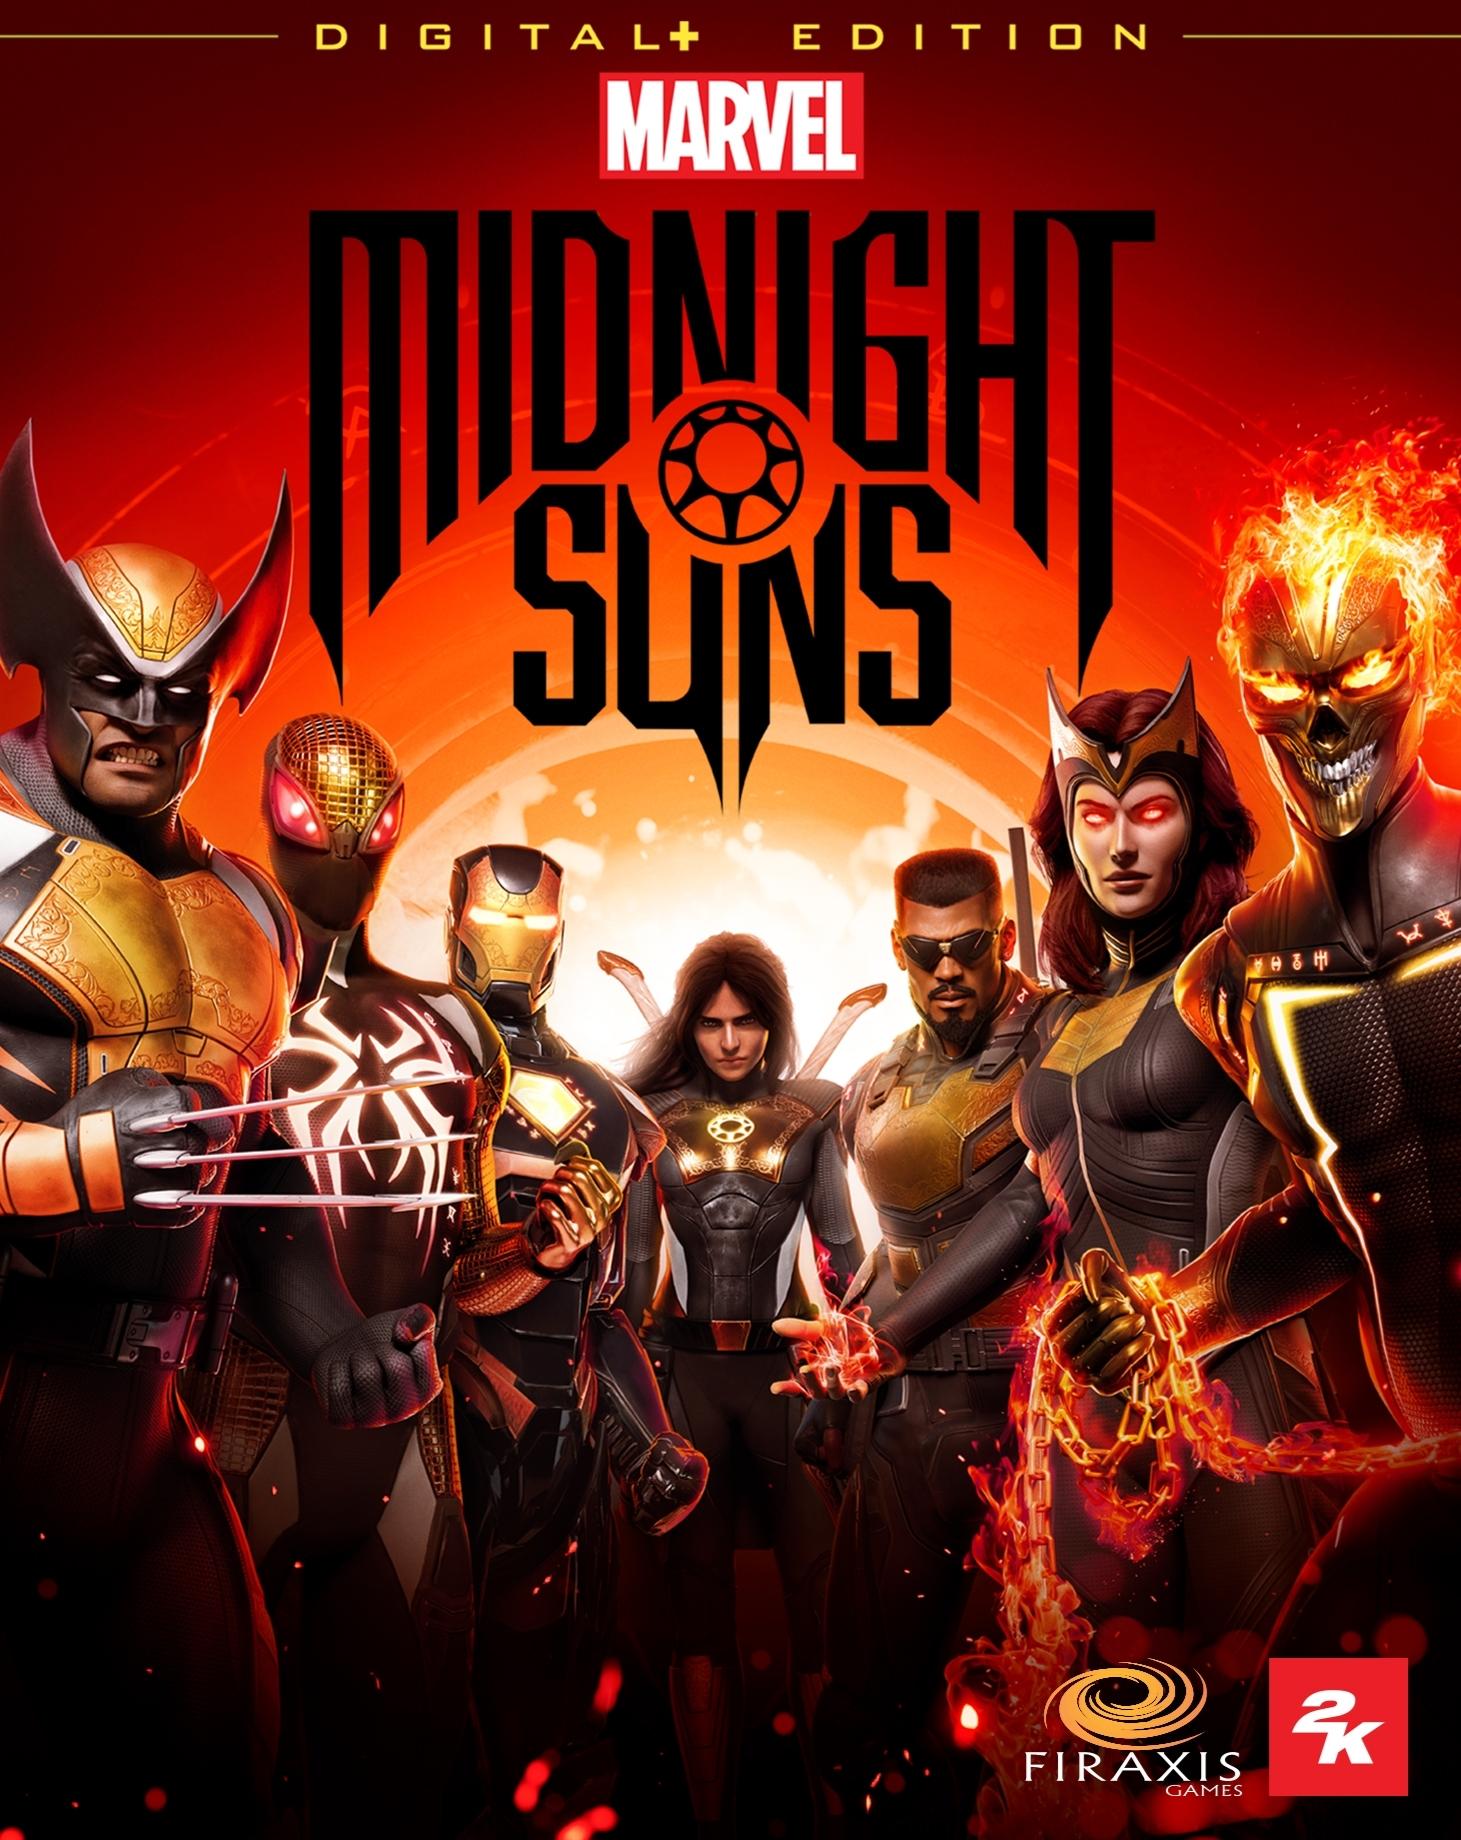 Marvel's Midnight Suns - Digital+ Edition (Steam) - Pre Order | LATAM (094e5317-d83d-4f9a-b5b7-8bb93eb71c61)